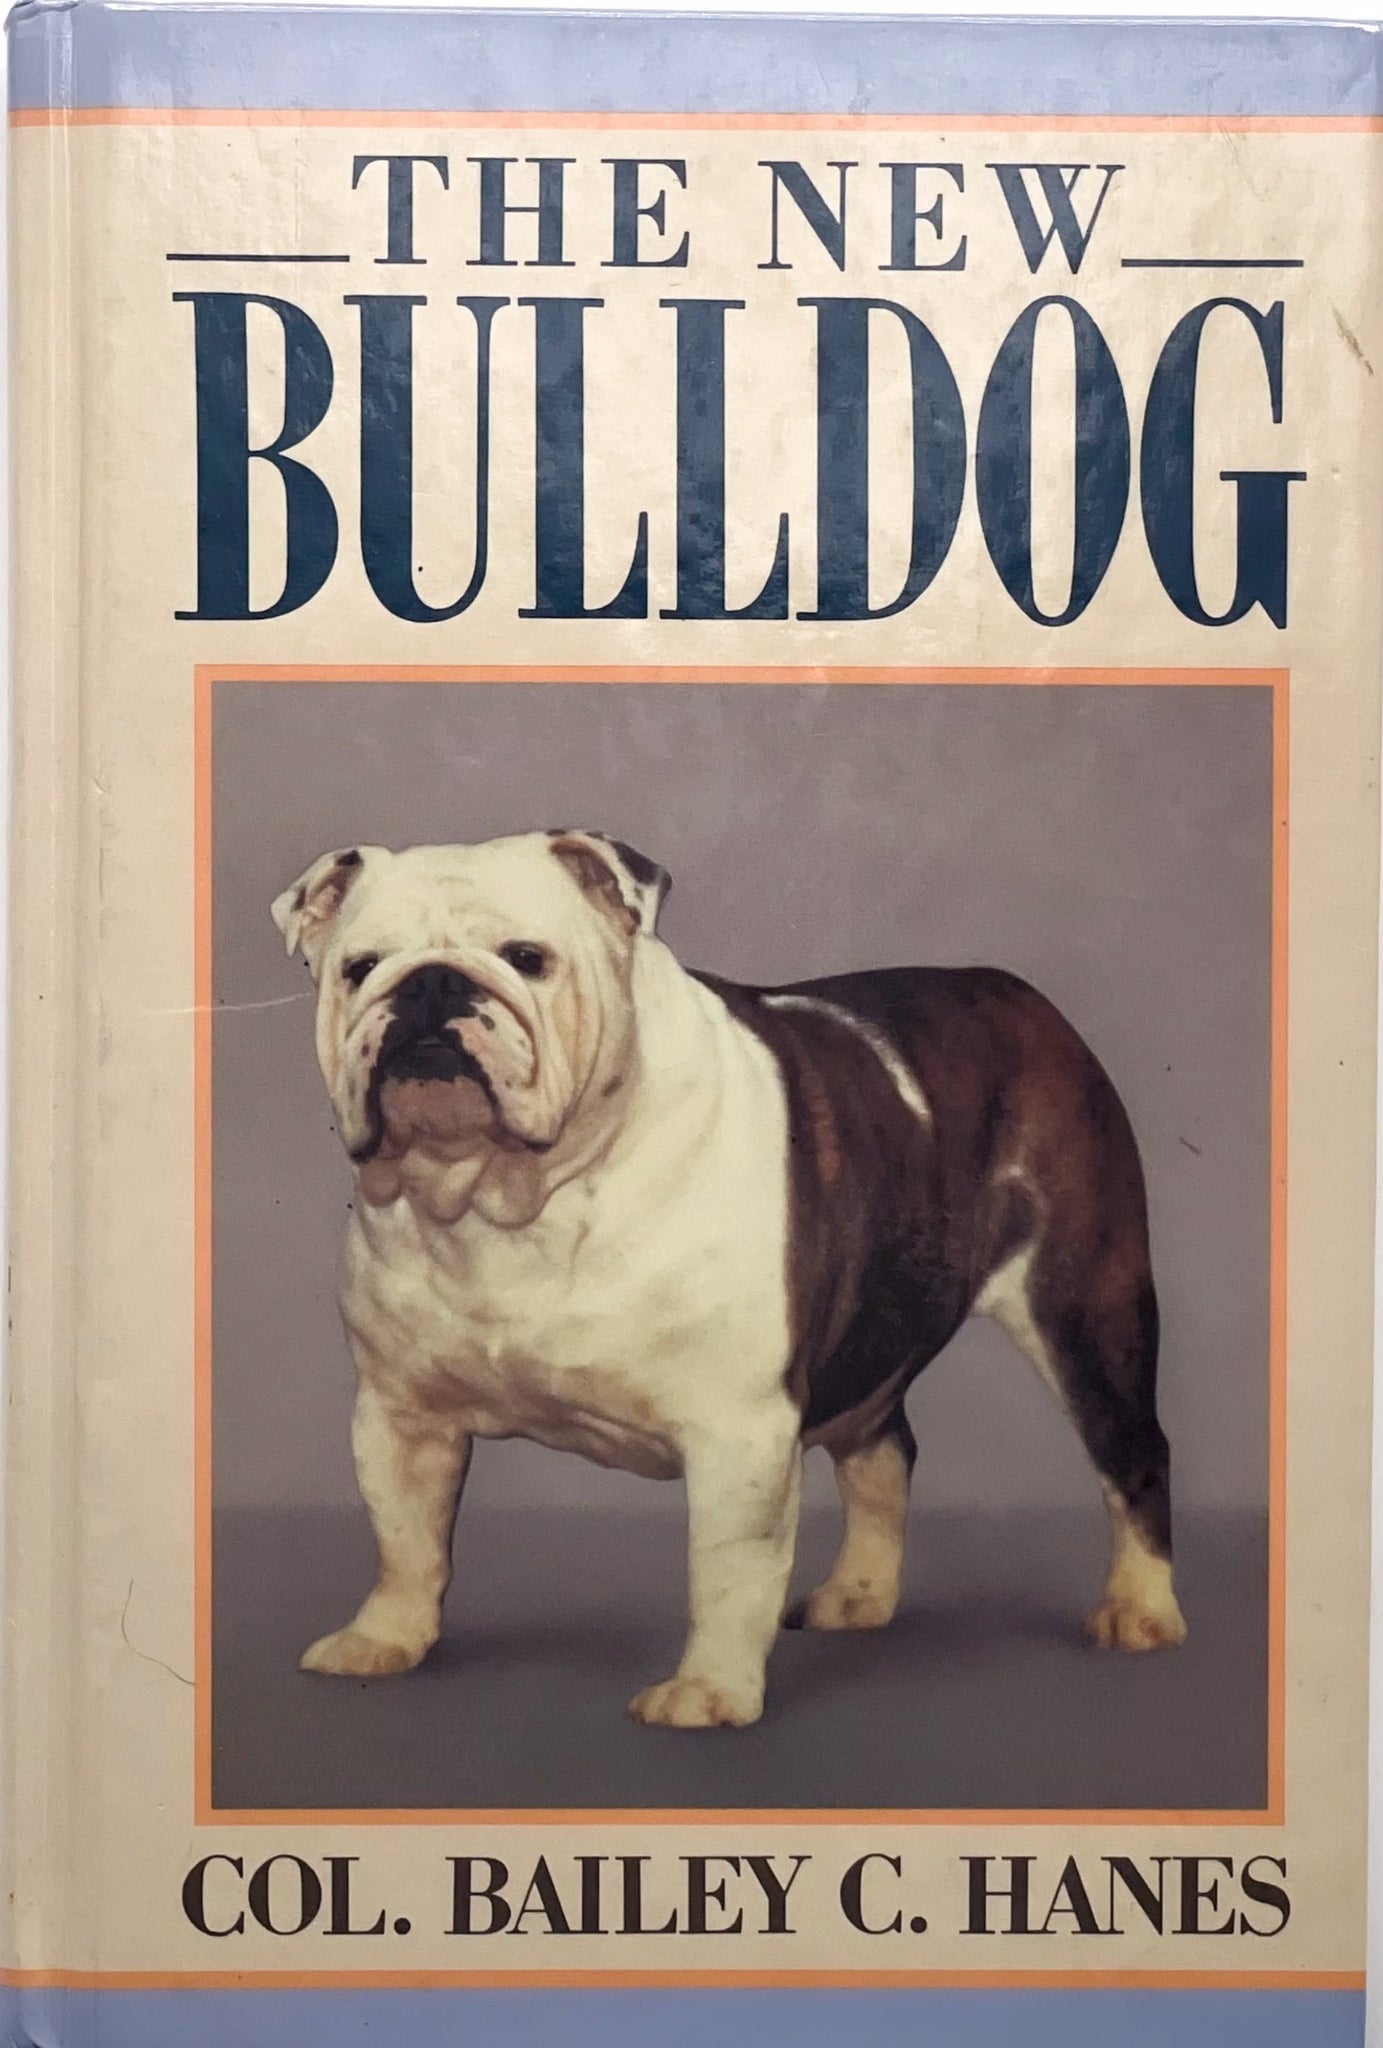 The New Bulldog, Col. Bailey C. Hanes – Pillow-Cat Books